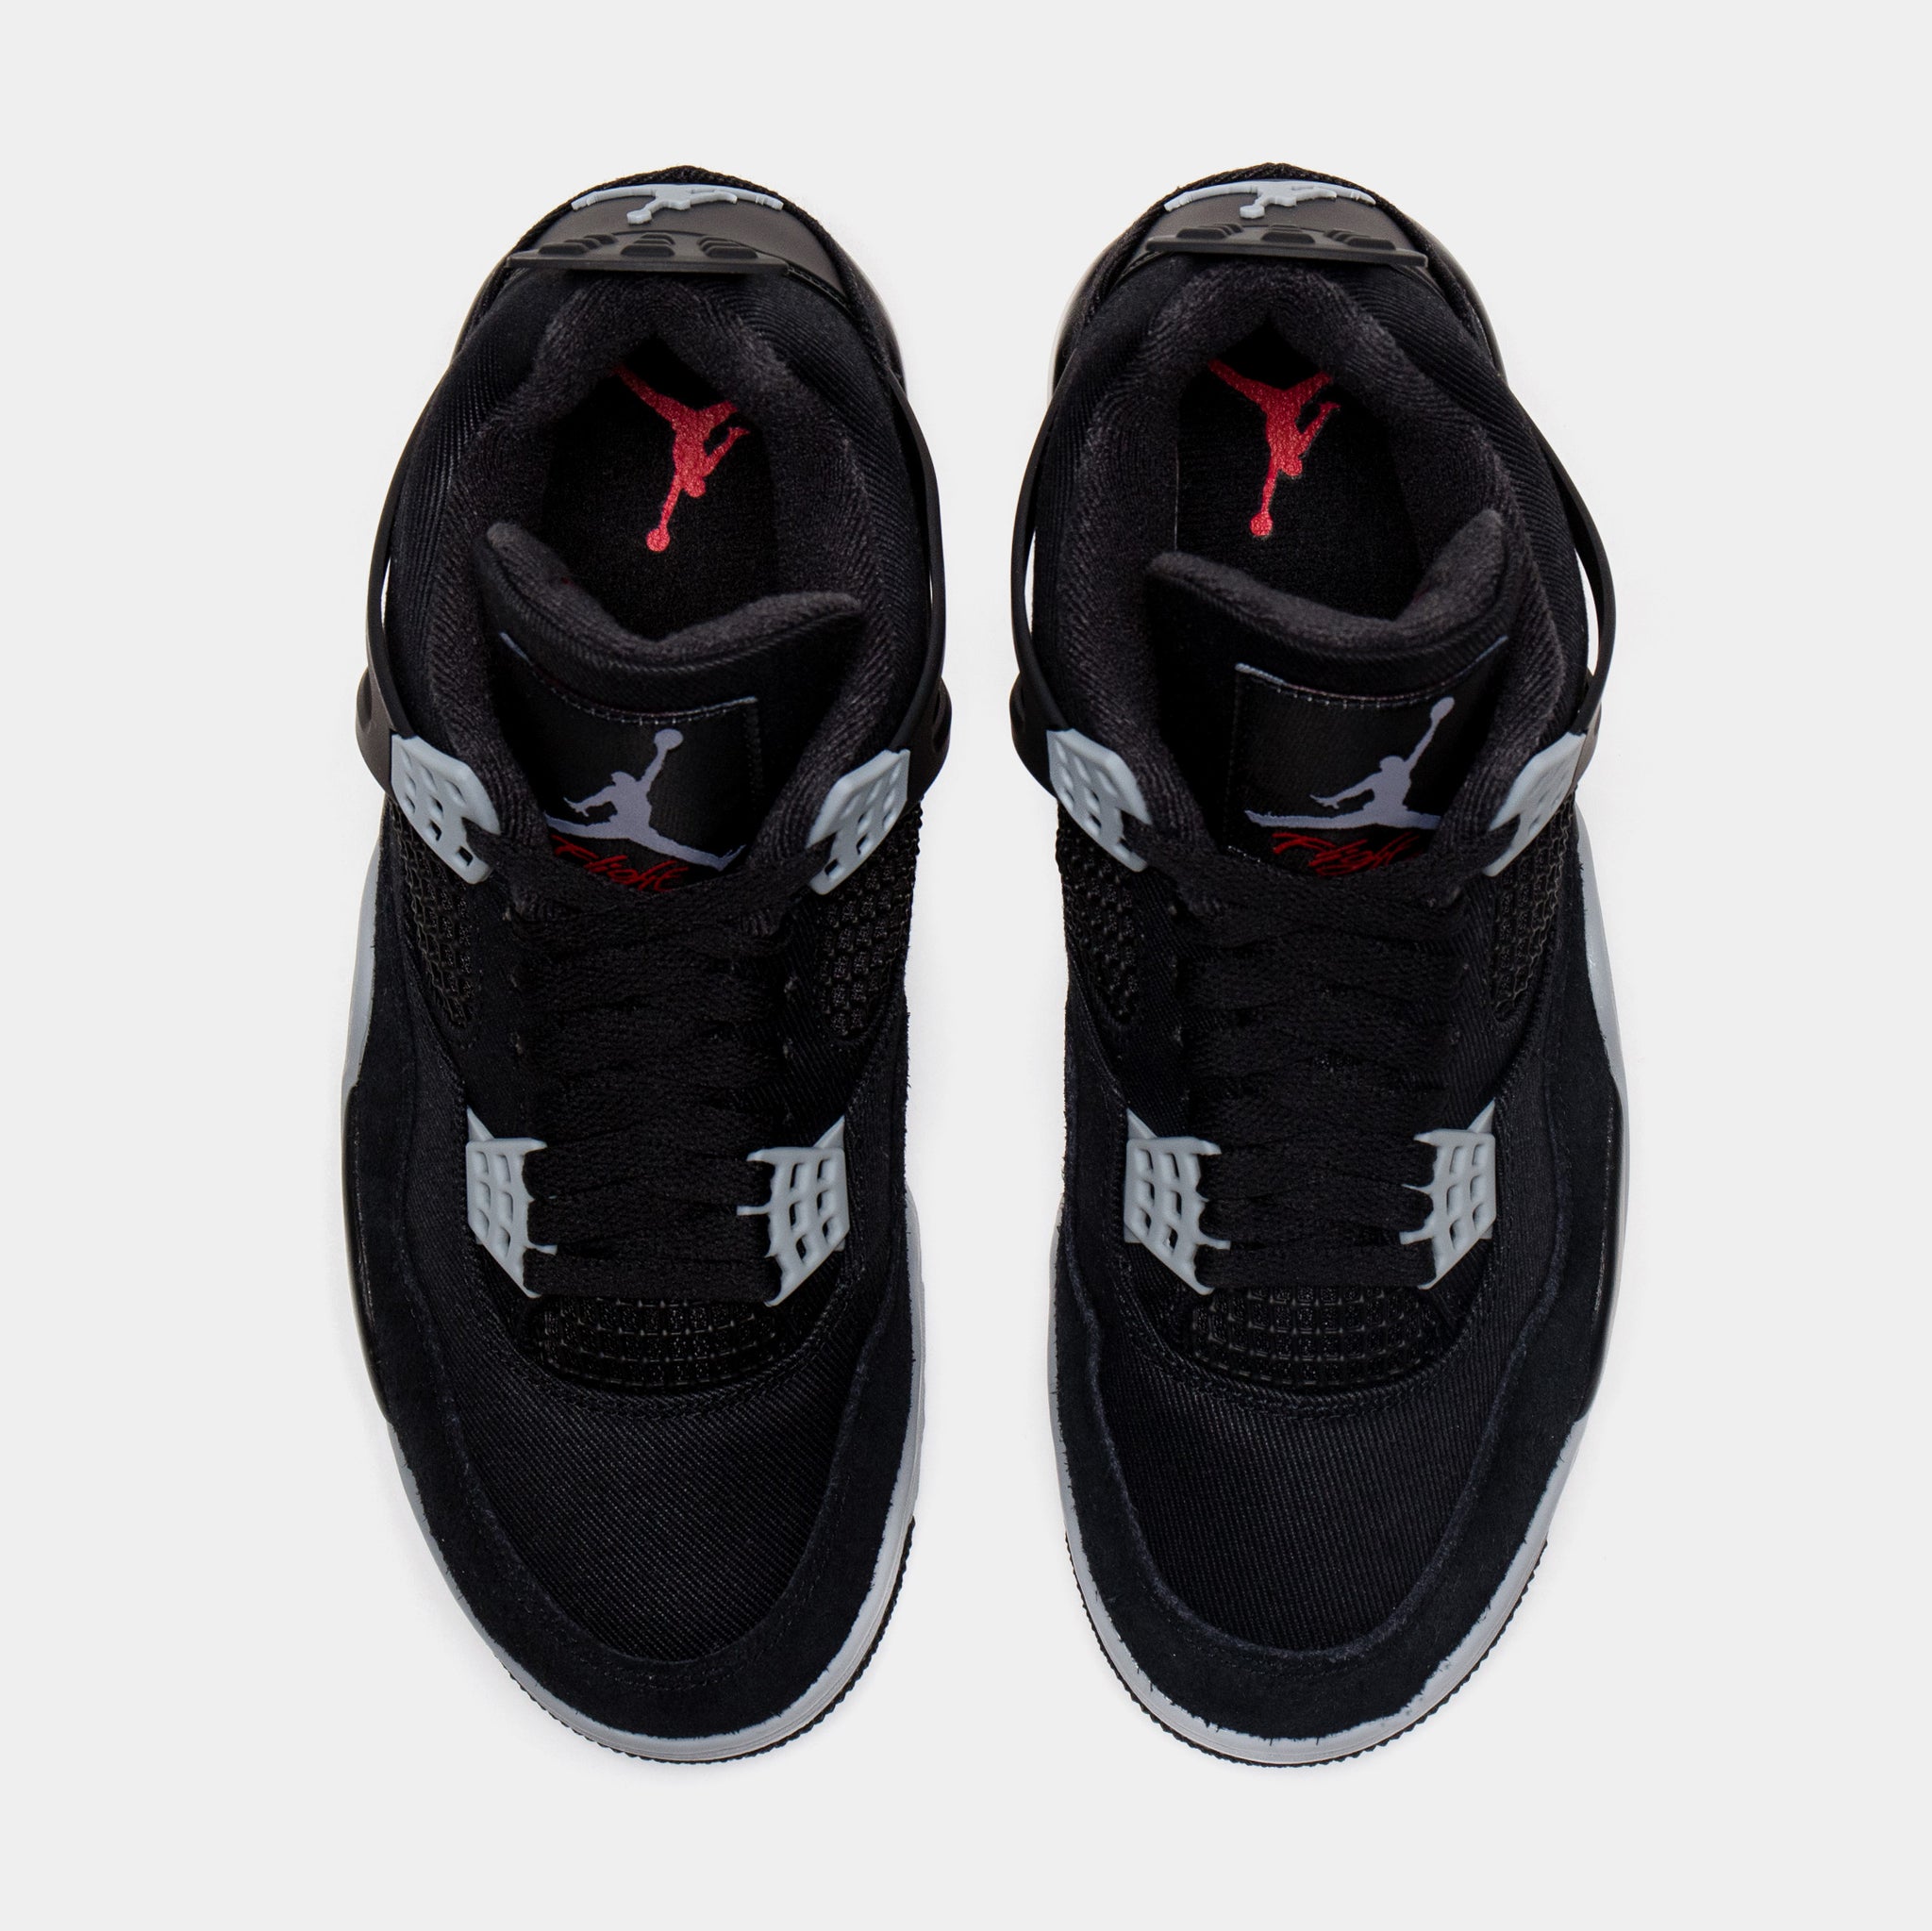 Jordan Air Jordan 4 SE Black Canvas Mens Lifestyle Shoes Black